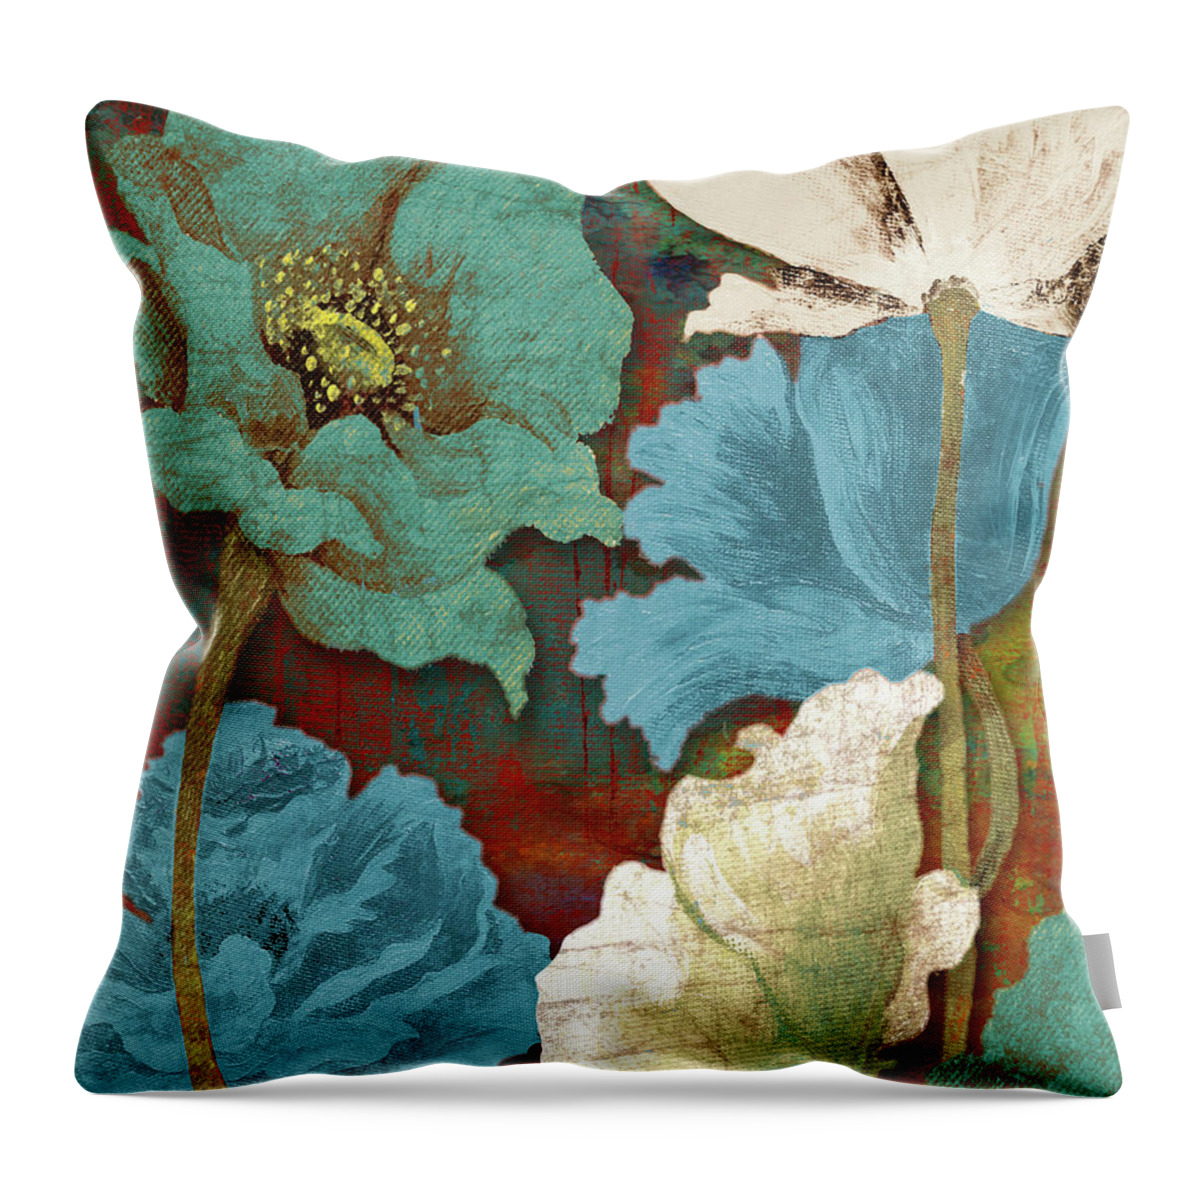 Autumn Throw Pillow featuring the digital art Autumn Floral by Elizabeth Medley